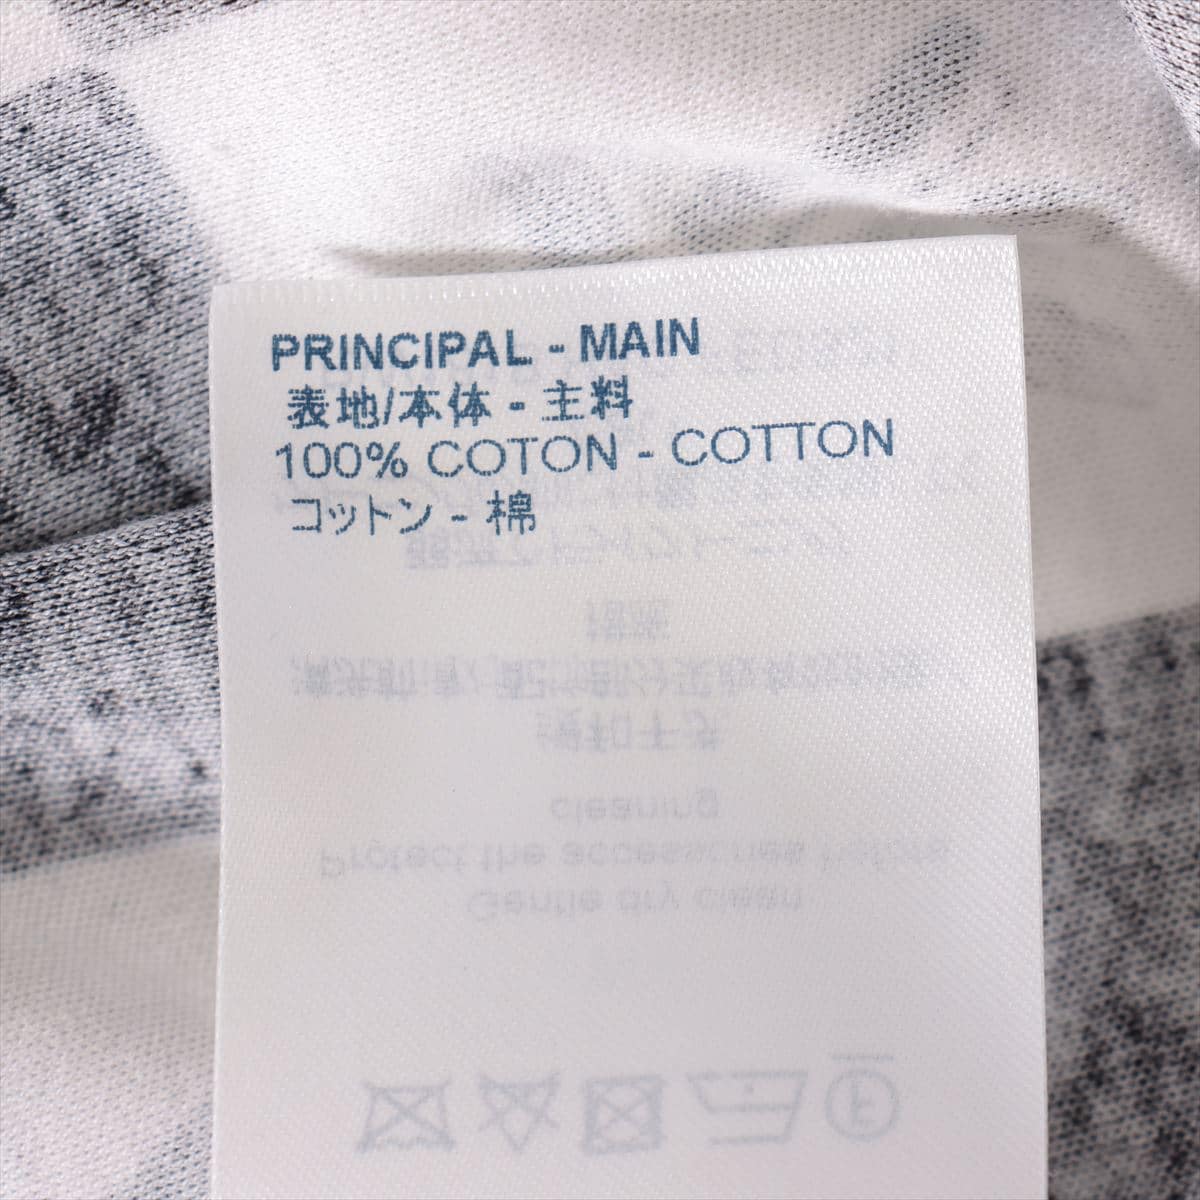 Louis Vuitton RW181B Cotton Dress XS Ladies' Black × White  docking twist print